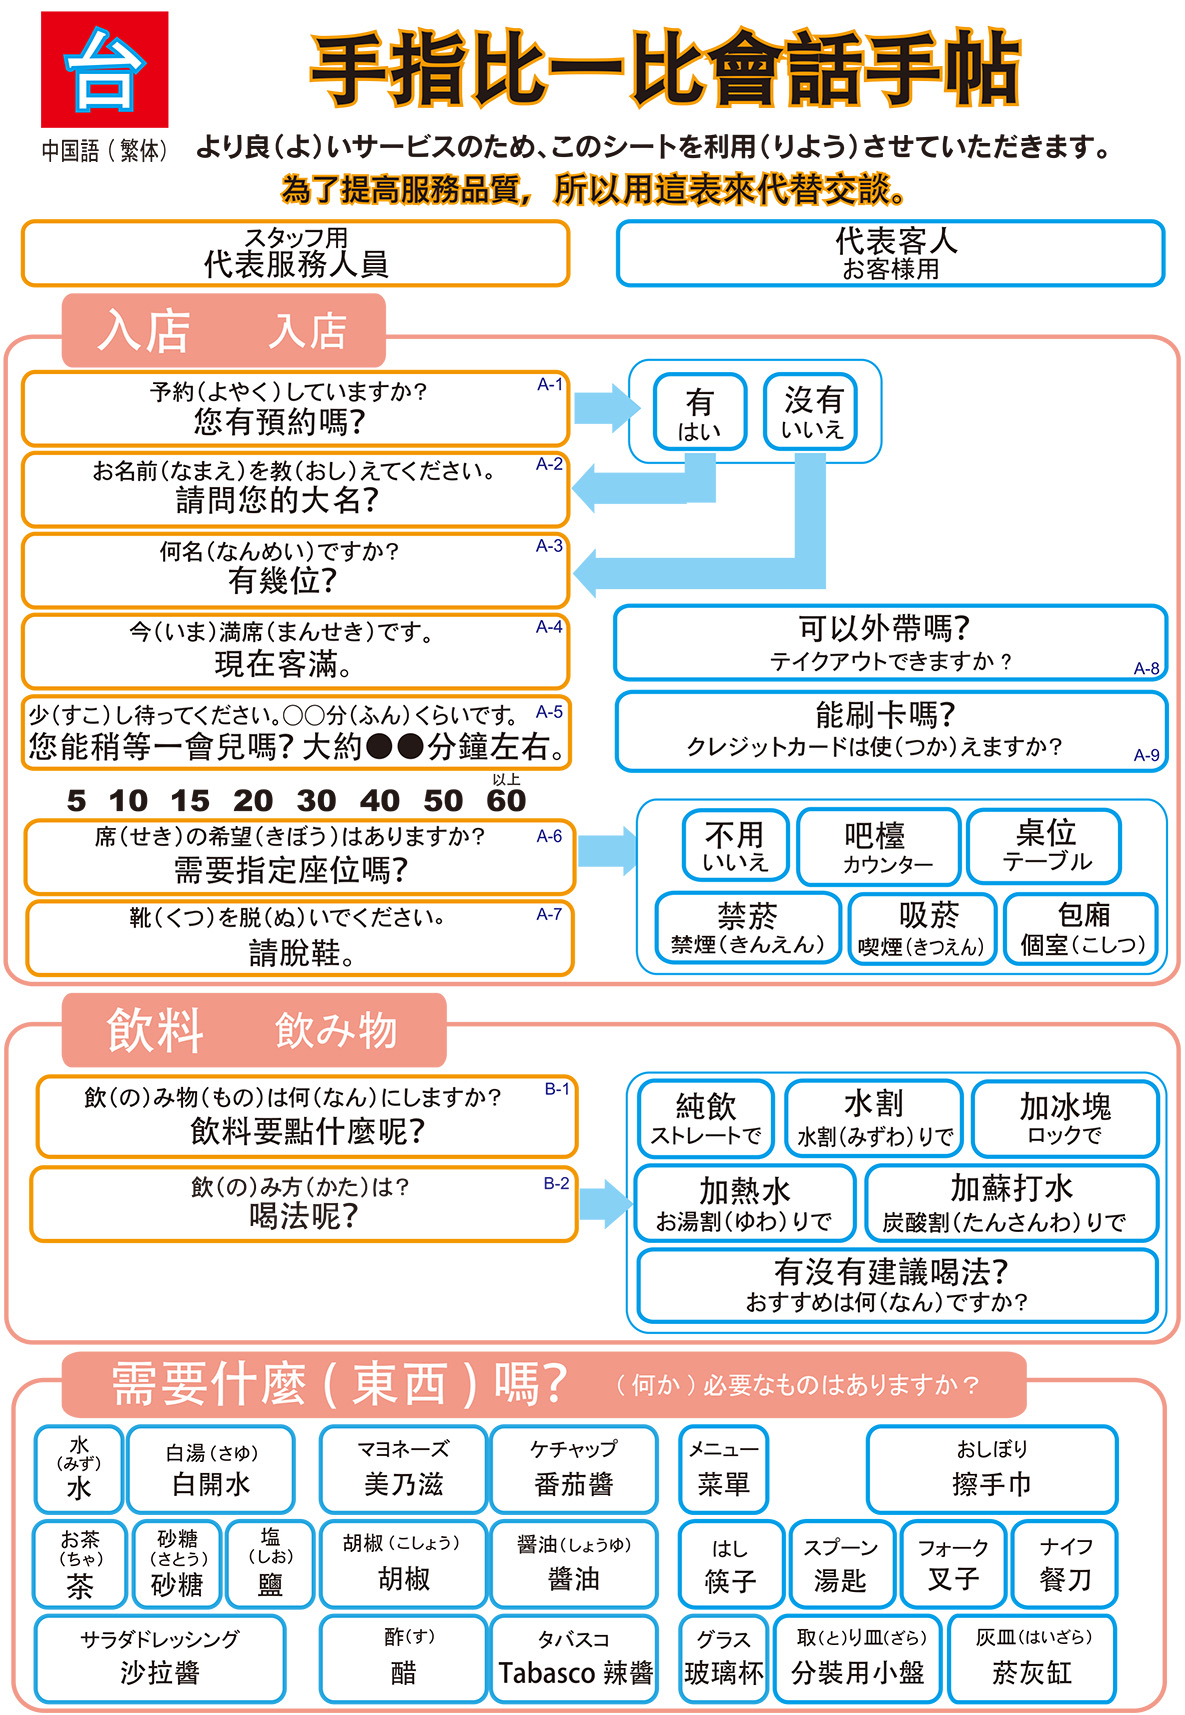 Point & Speak Sheet in Chinese